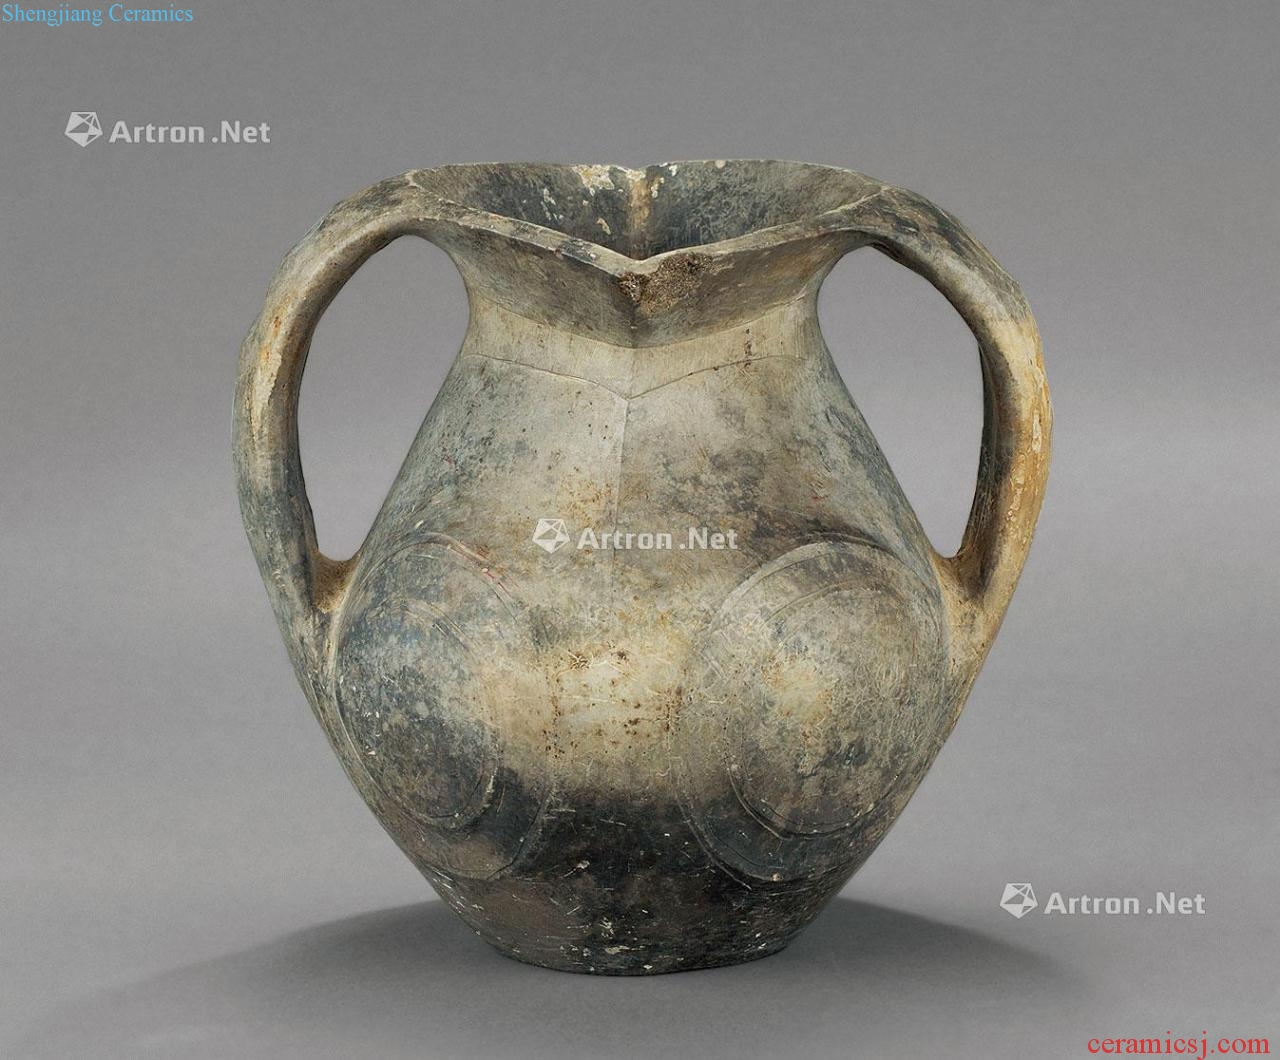 The han dynasty Black pottery binaural pot